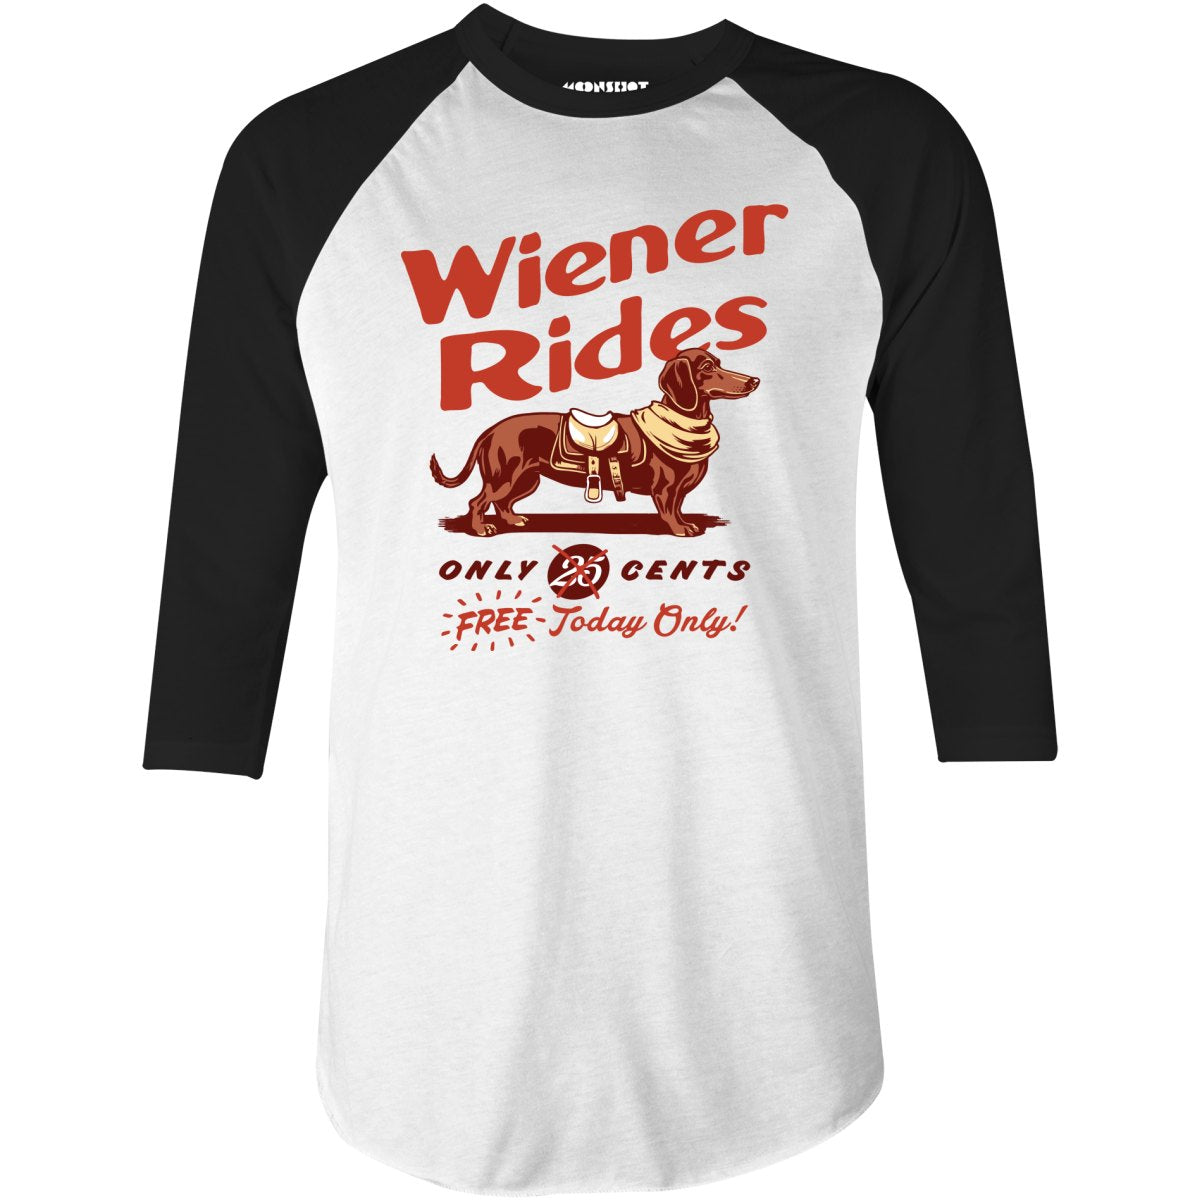 Wiener Rides - 3/4 Sleeve Raglan T-Shirt